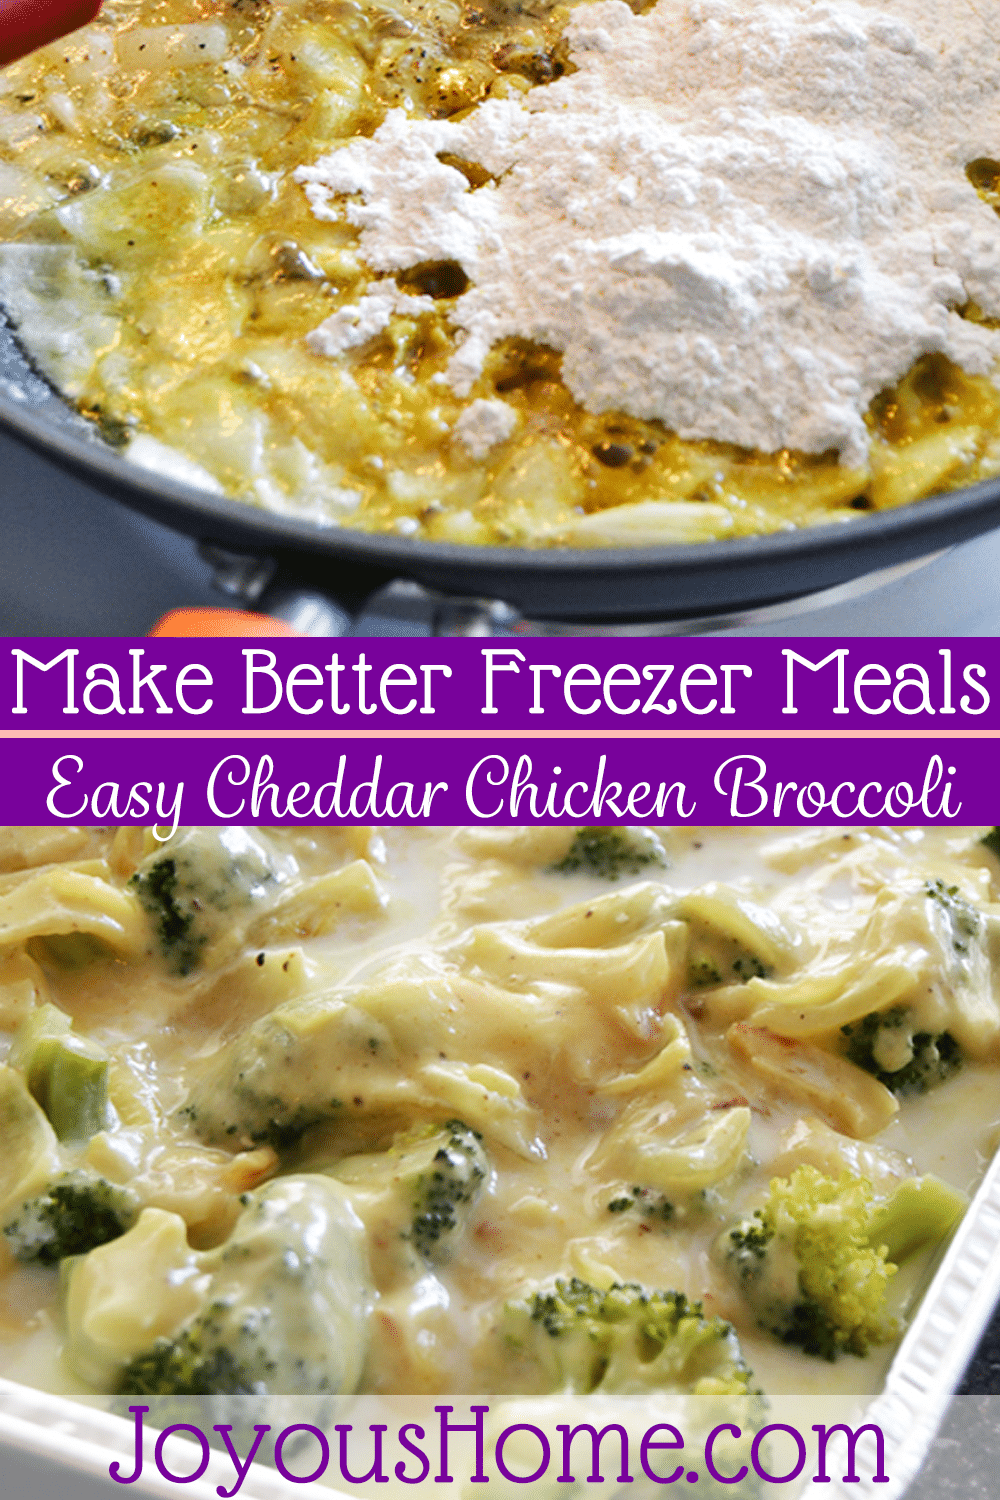 Make Better Freezer Meals - Cheddar Chicken Broccoli